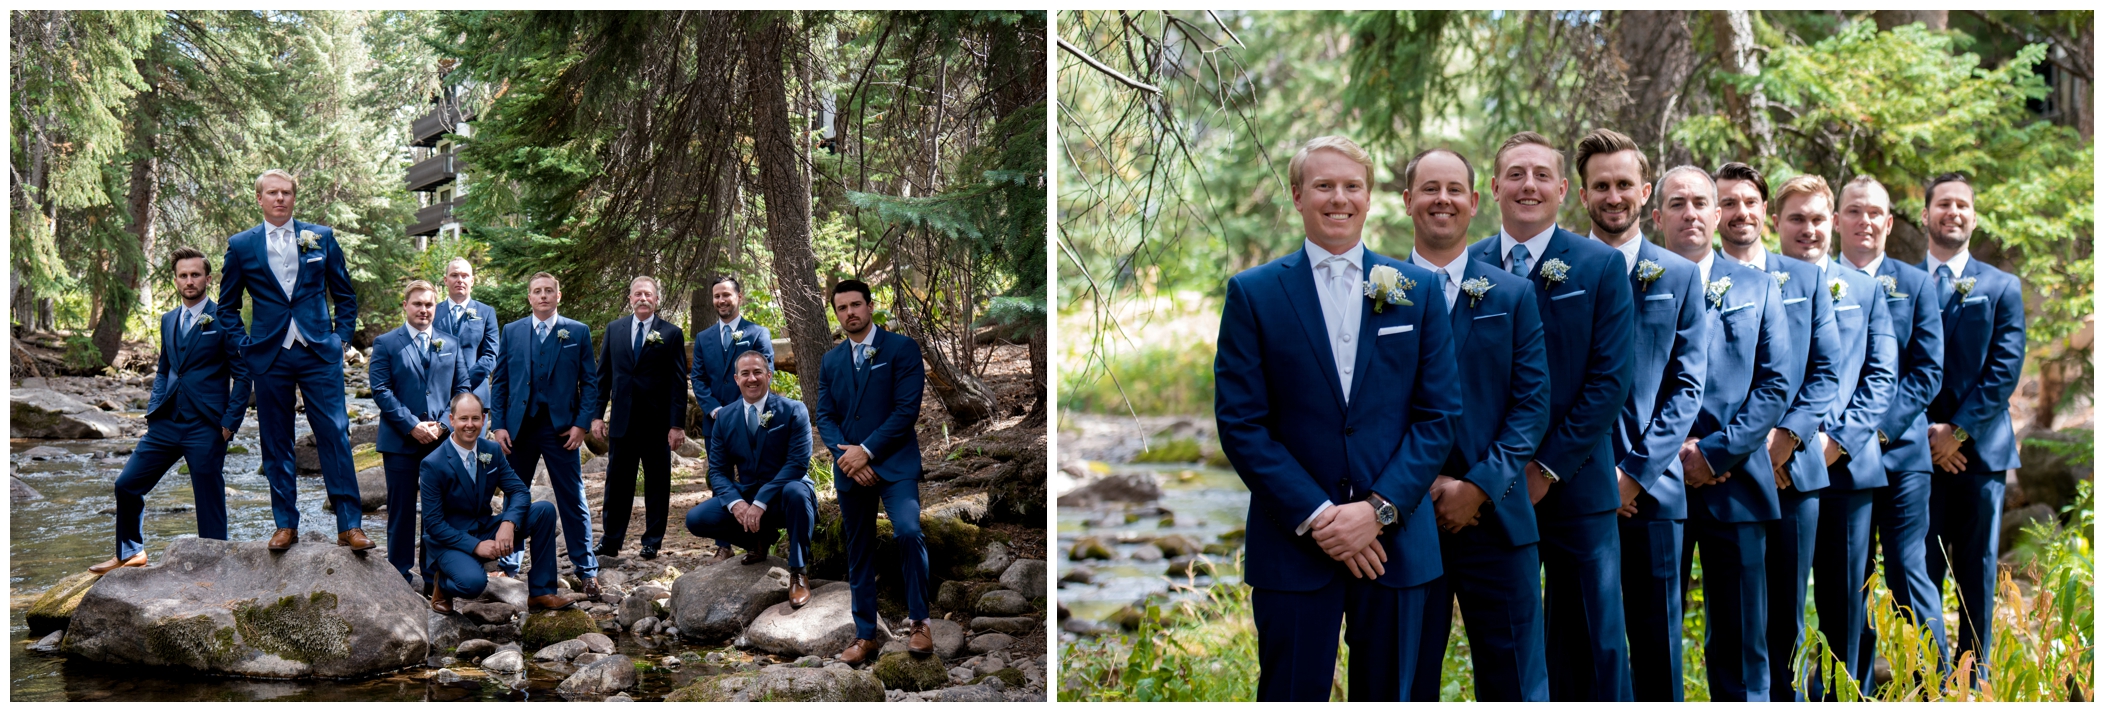 Colorado groom in navy blue suit posing in forest